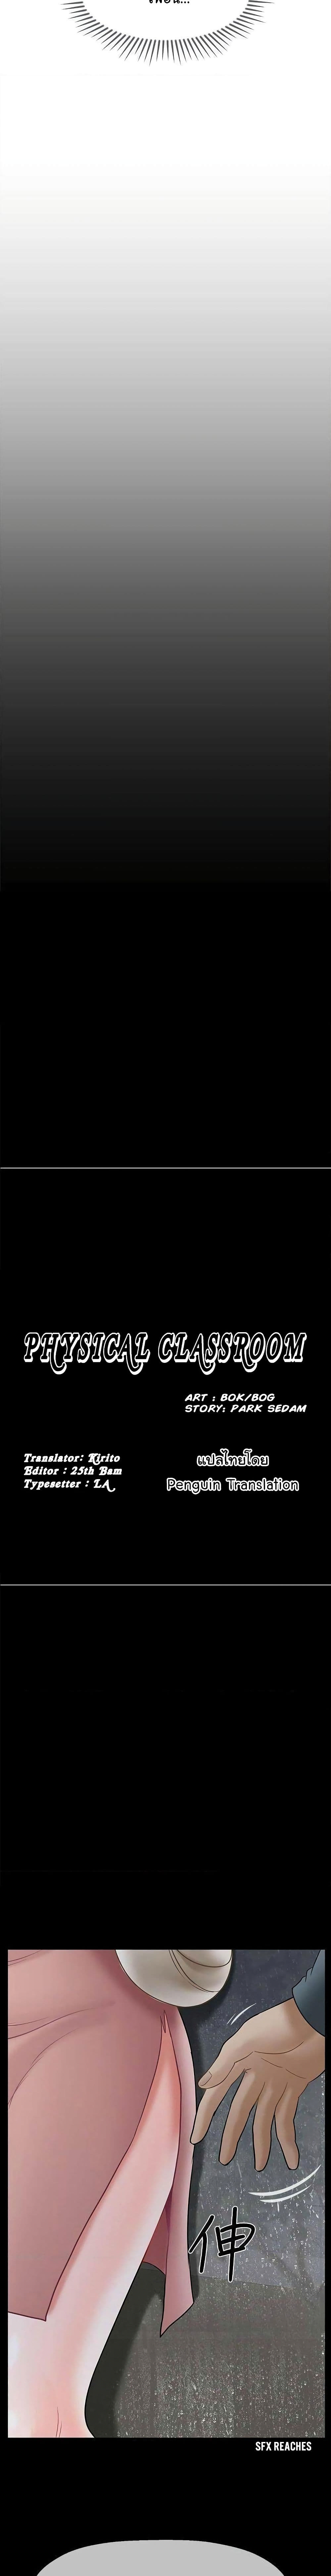 A Physical Classroom 29-29